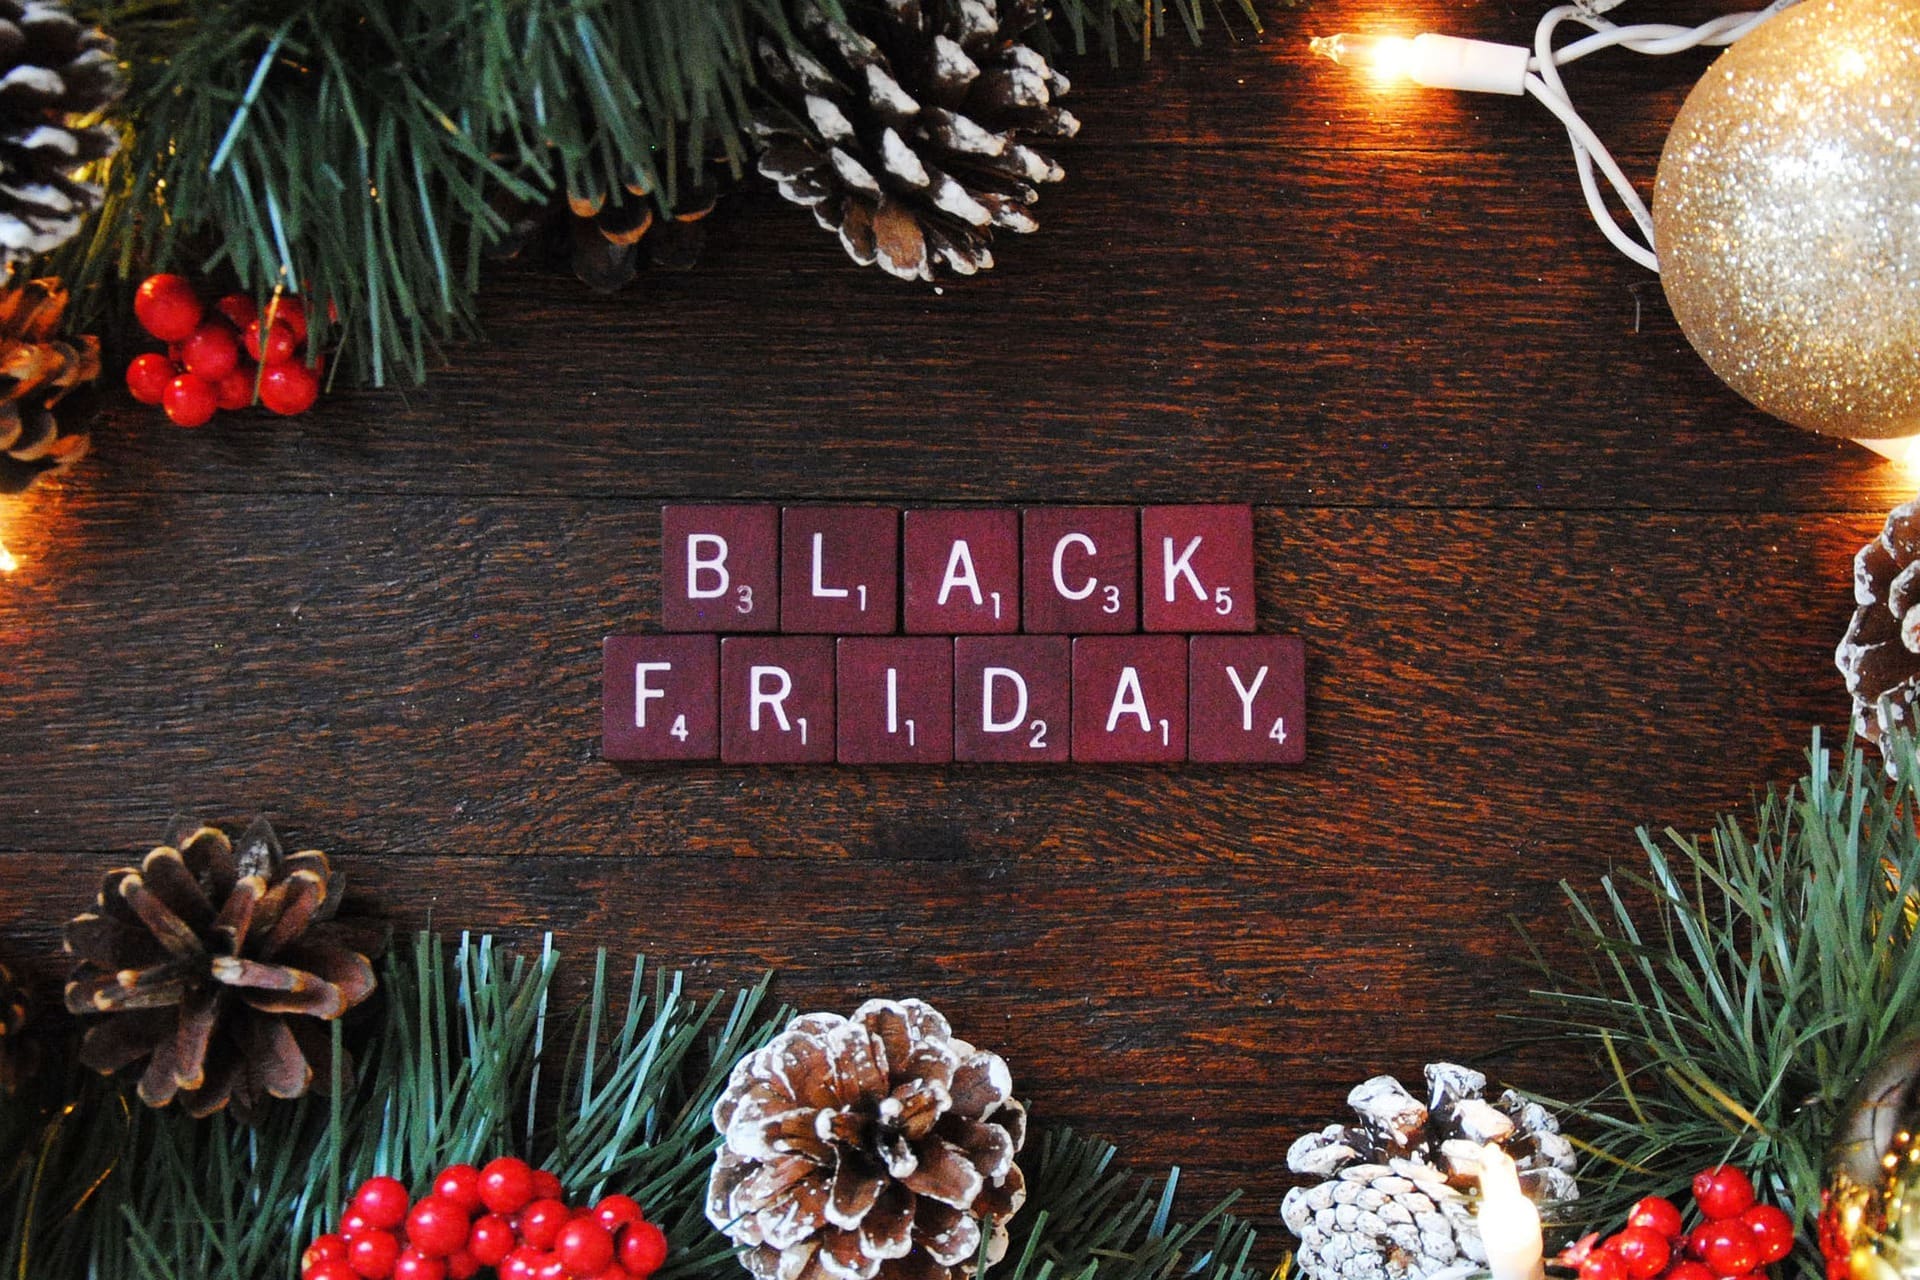 Black Friday Shopping ErrorsCostly Black Friday Blunders
Avoiding Black Friday Mistakes
Black Friday Shopping Tips
Best Black Friday Practices